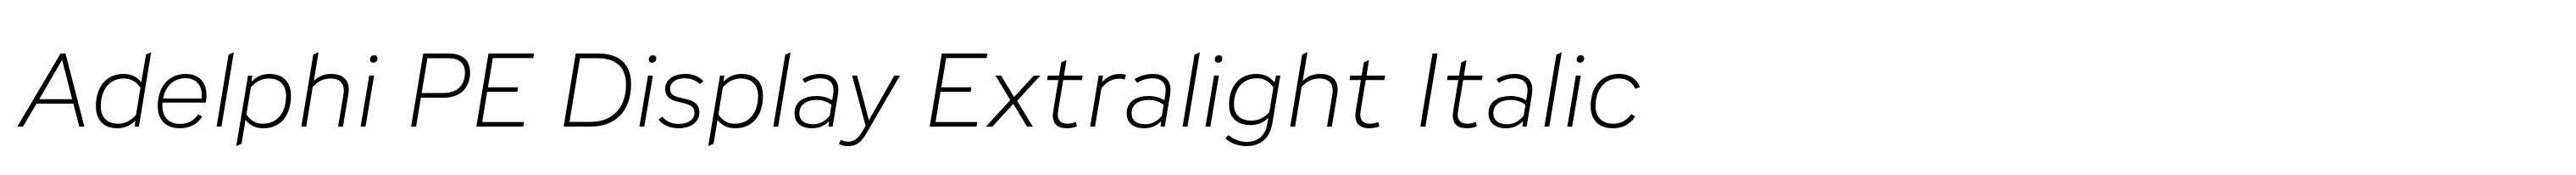 Adelphi PE Display Extralight Italic